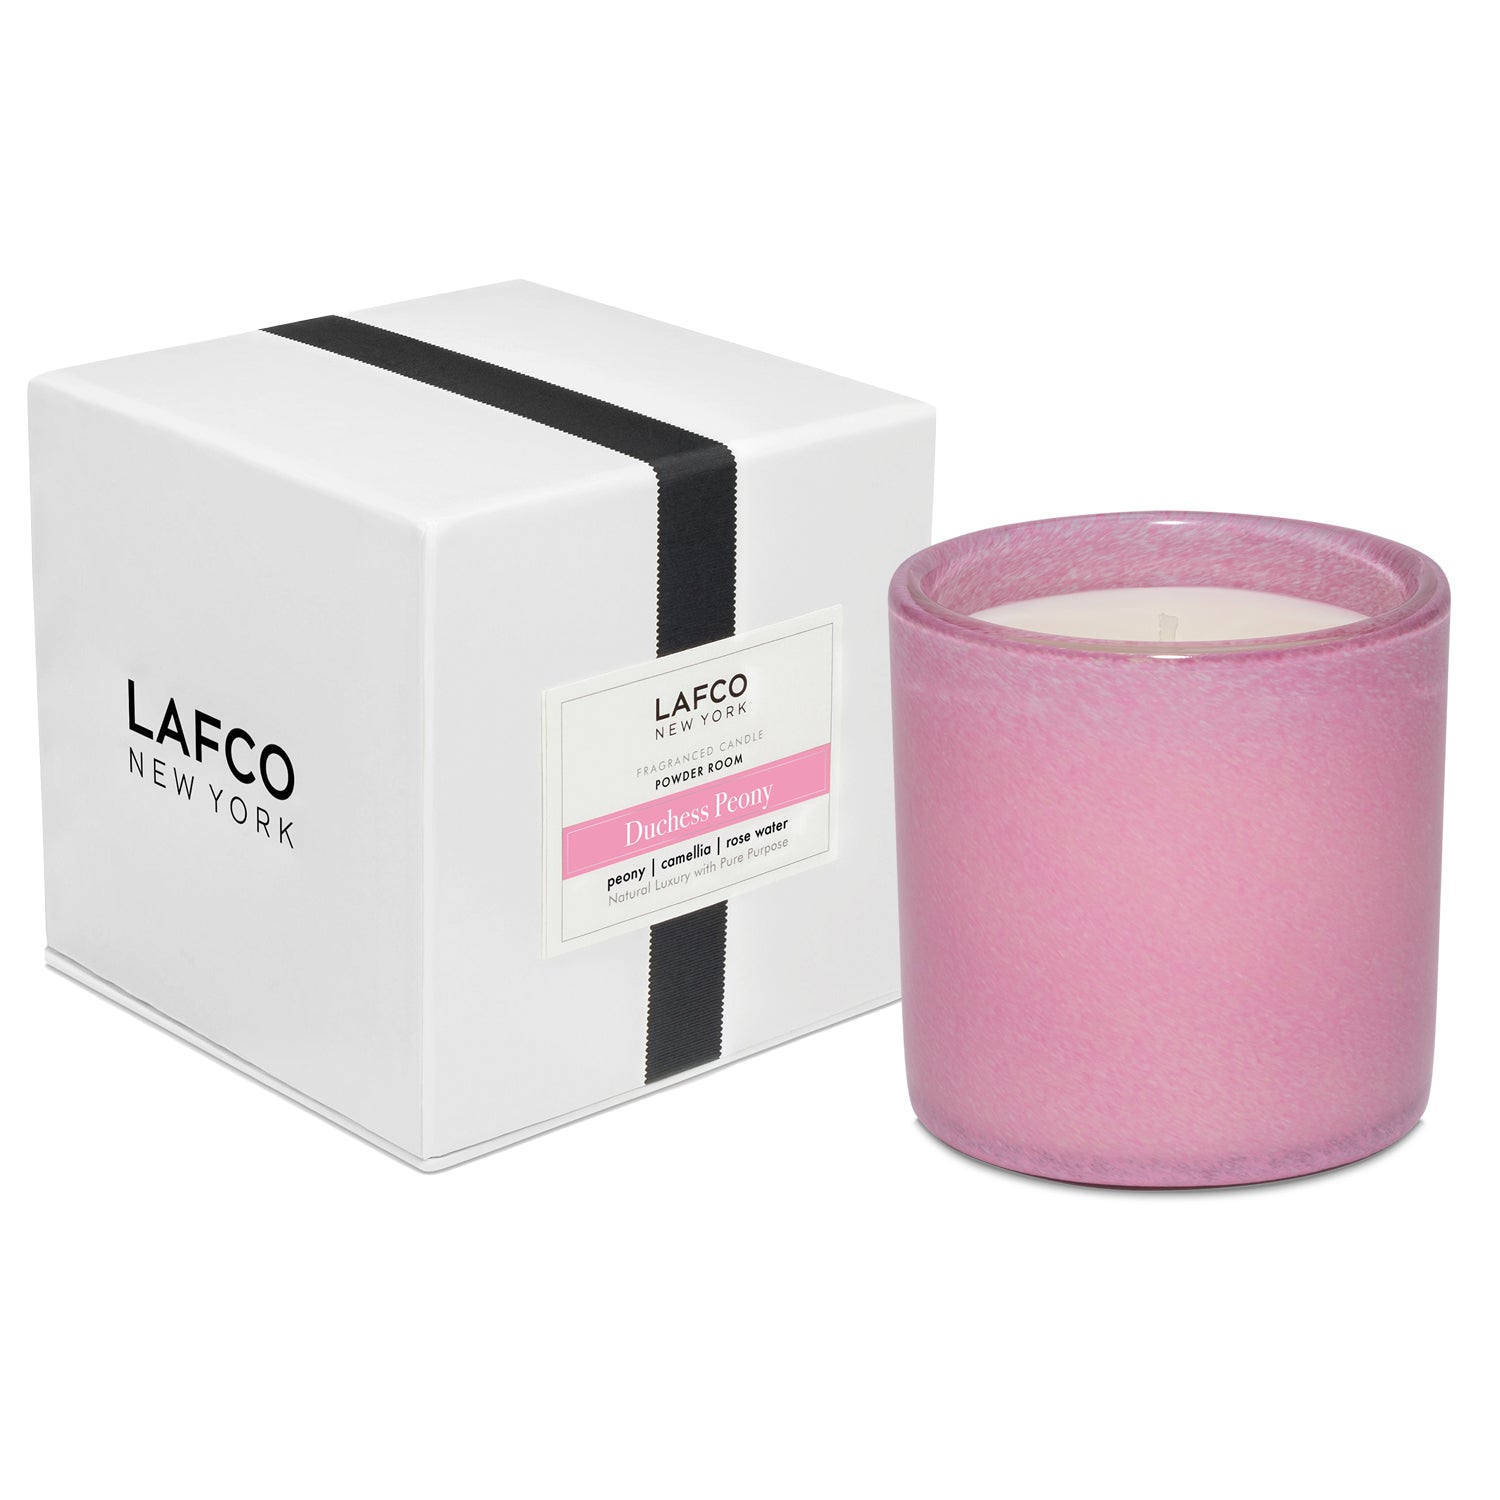 LAFCO 15.5 oz Powder Room (Duchess Peony) Candle